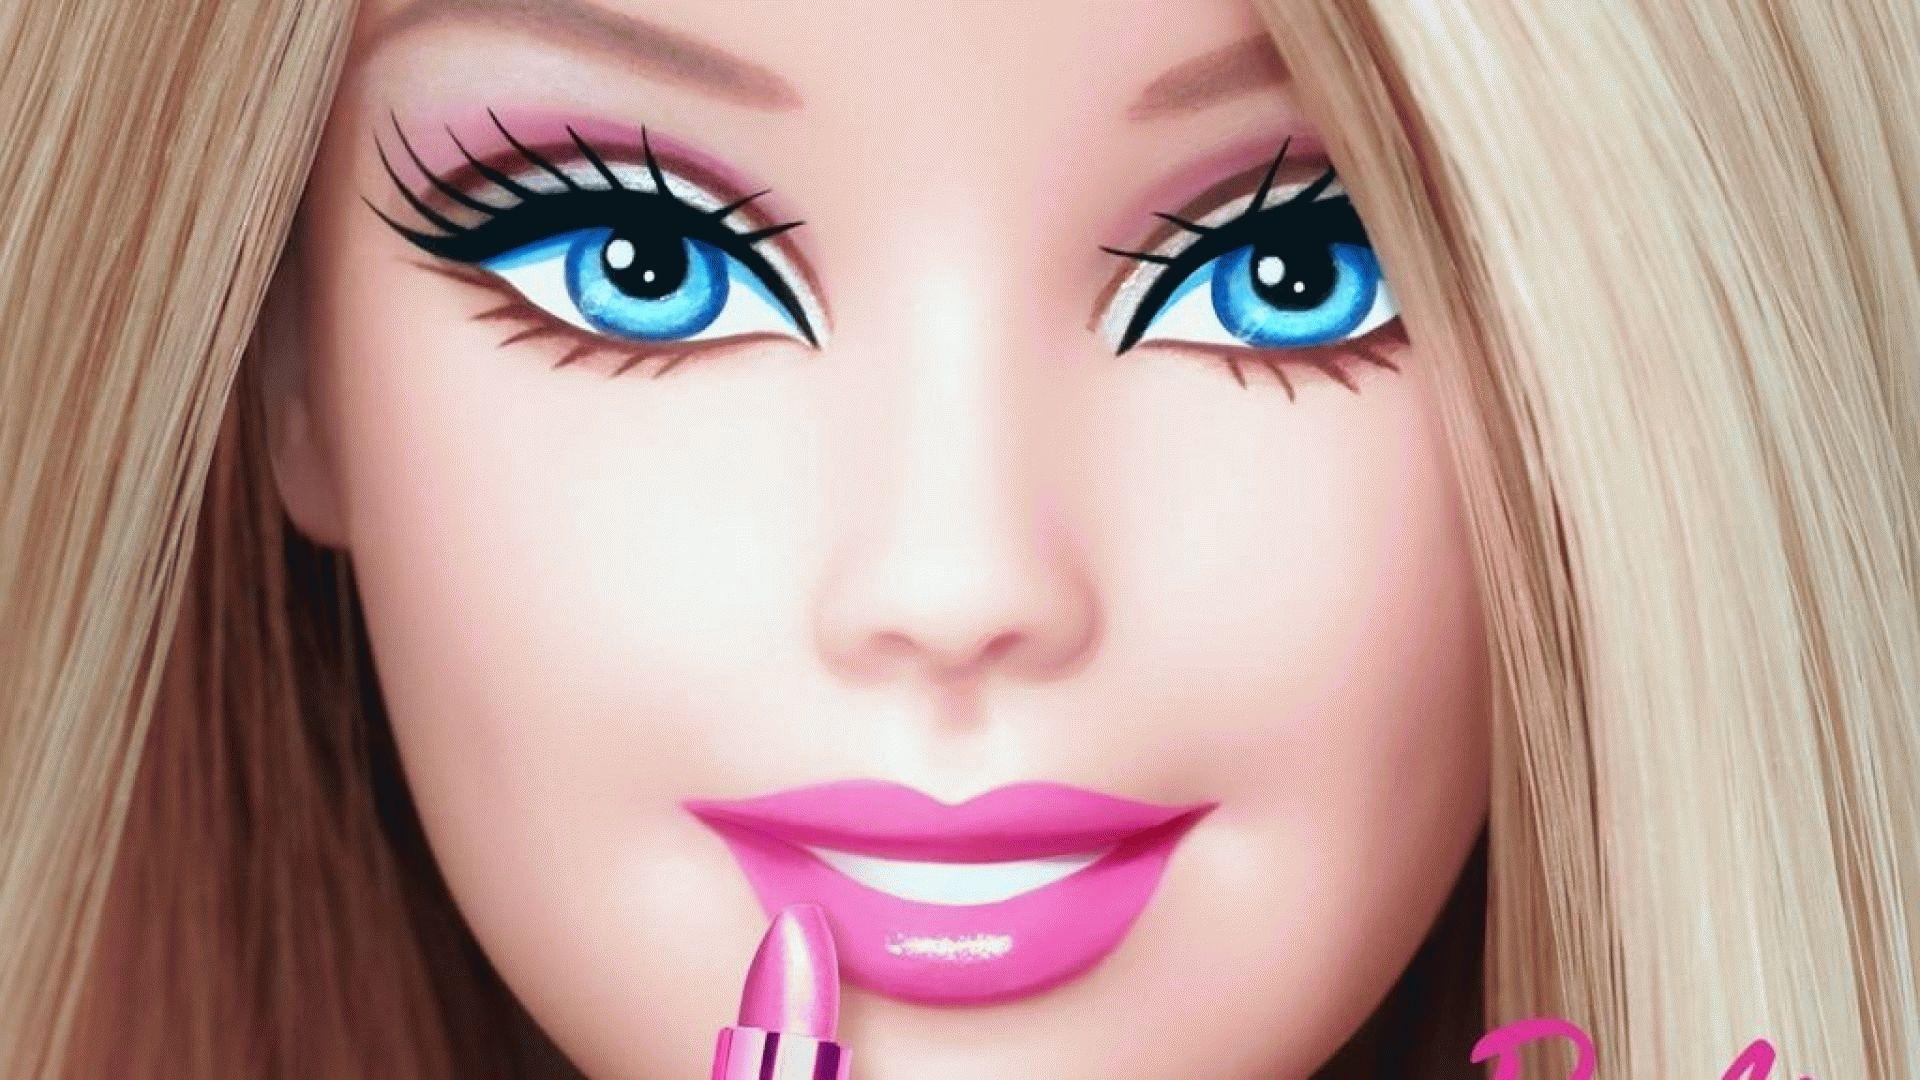 HD Barbie wallpaper for Desktop. wallpaper. Wallpaper